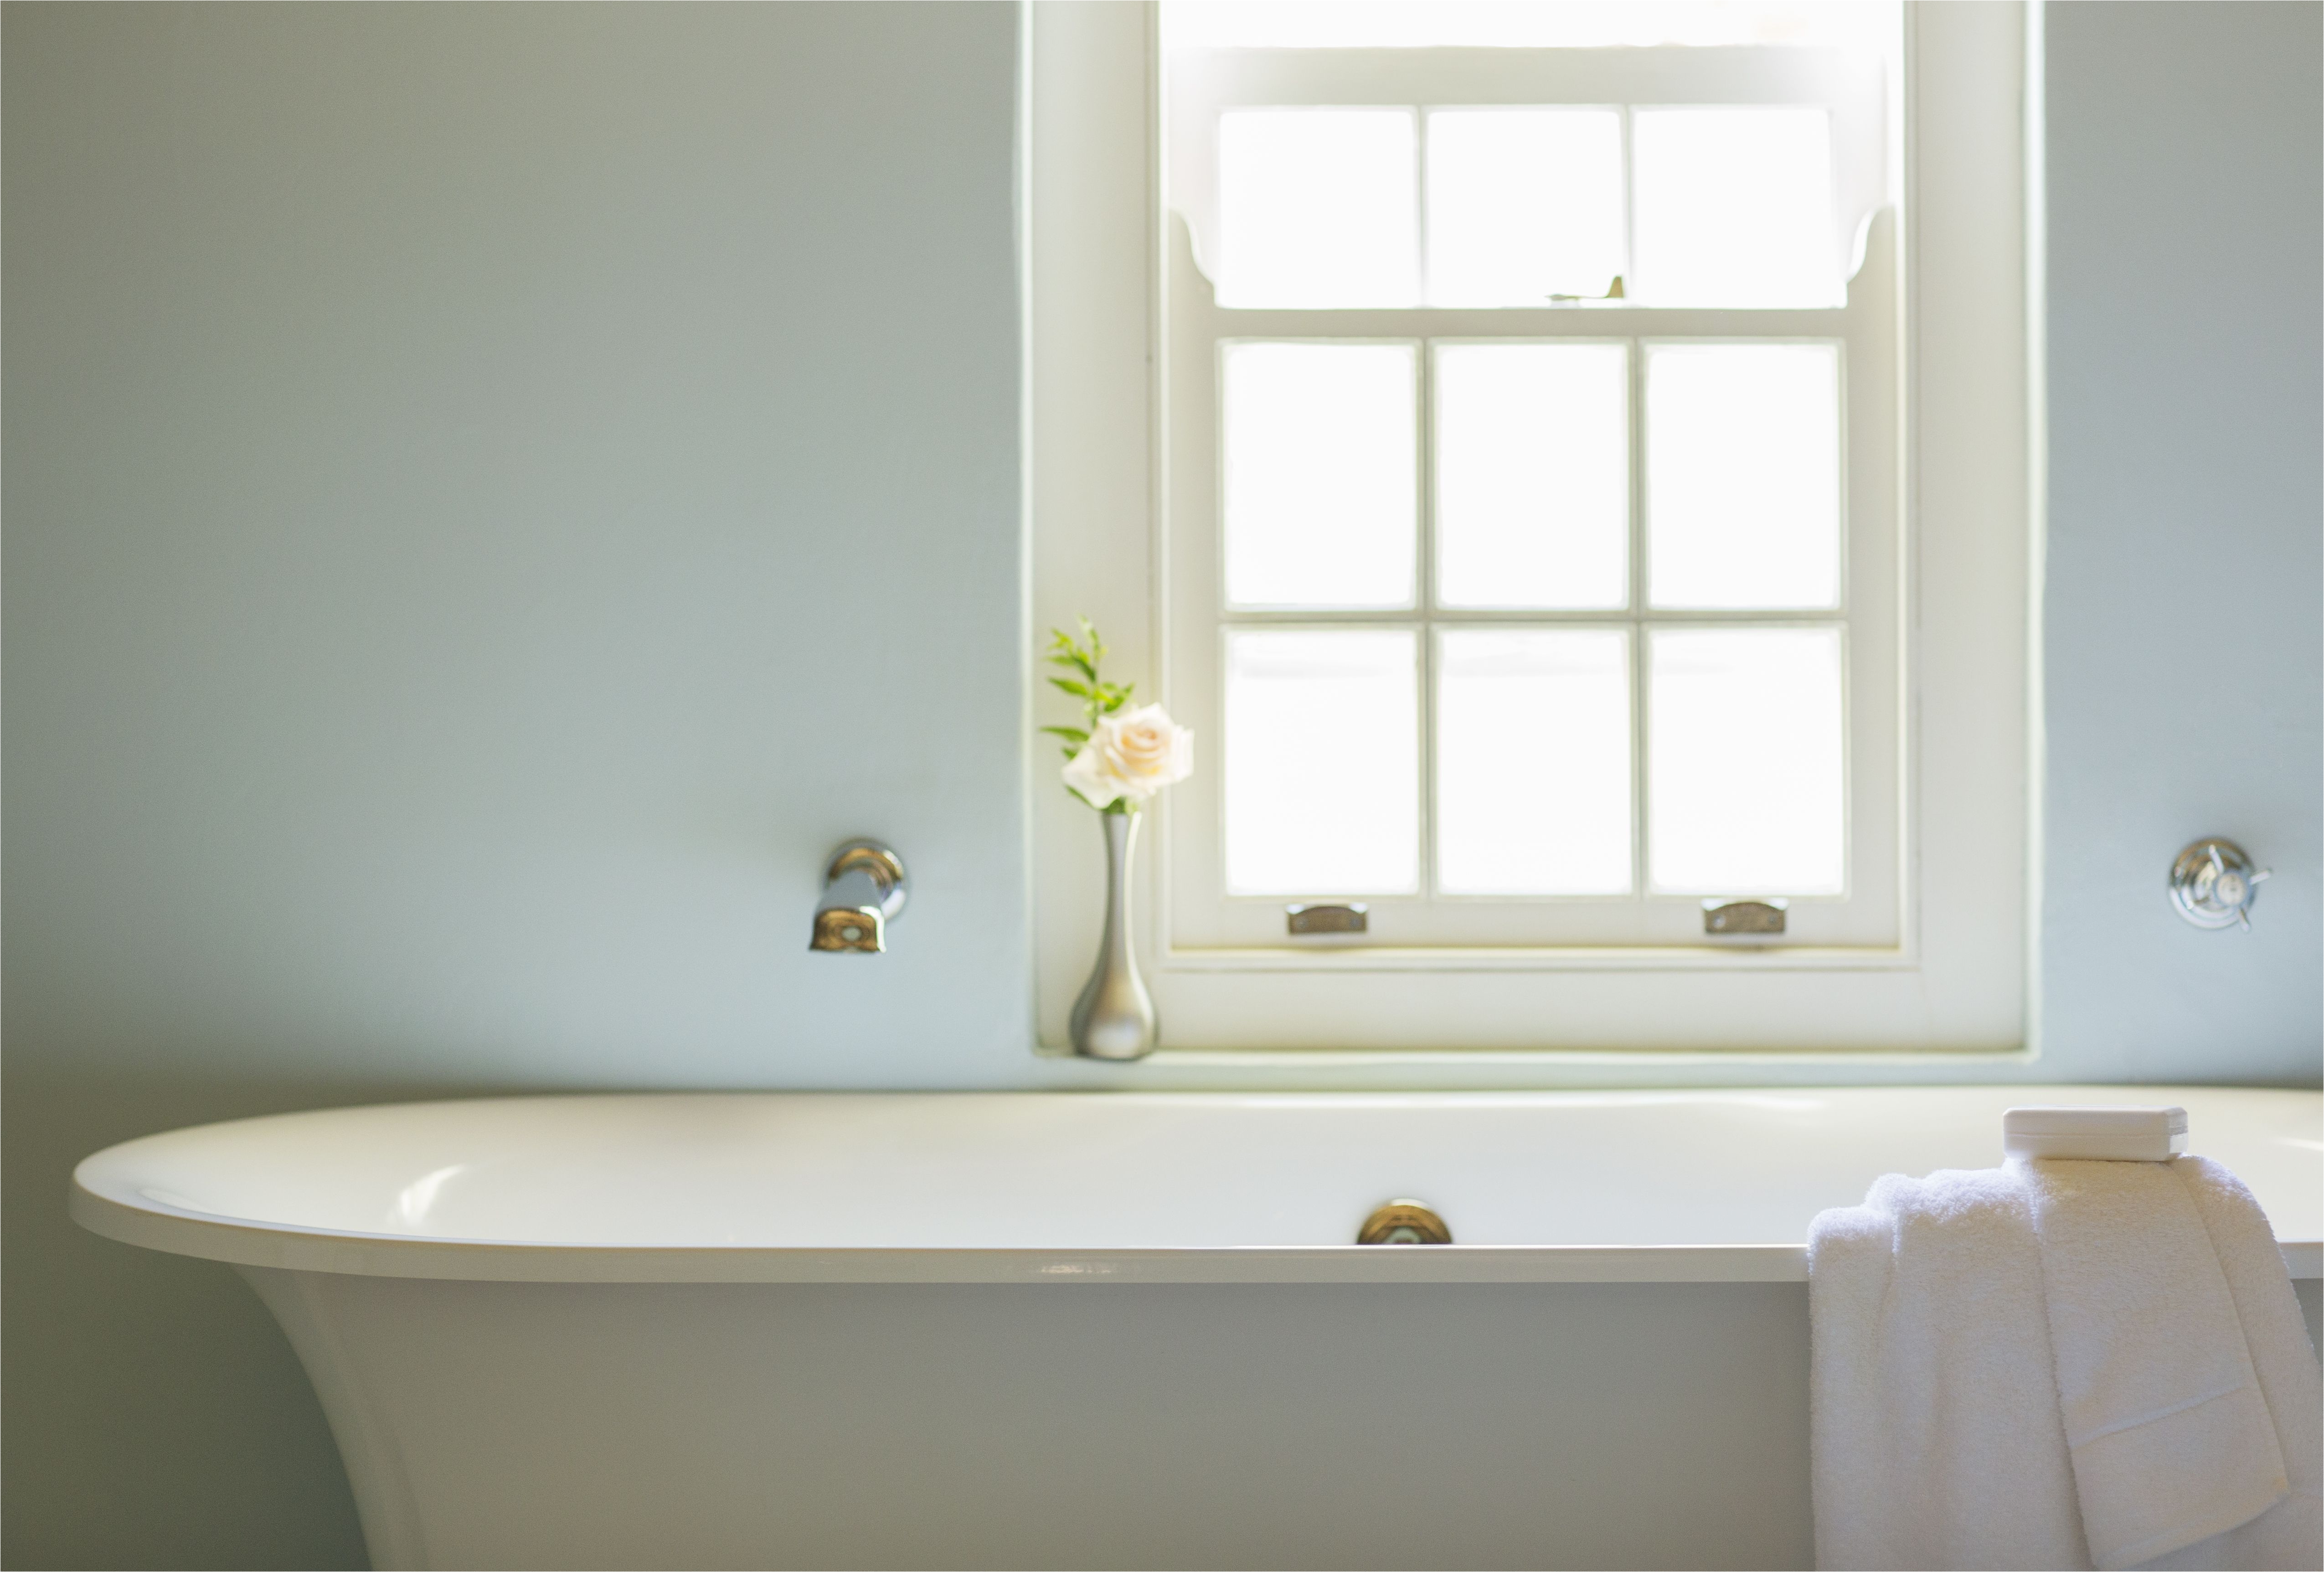 soaking tub below window in luxury bathroom 494358425 5aa1e931c064710037061882